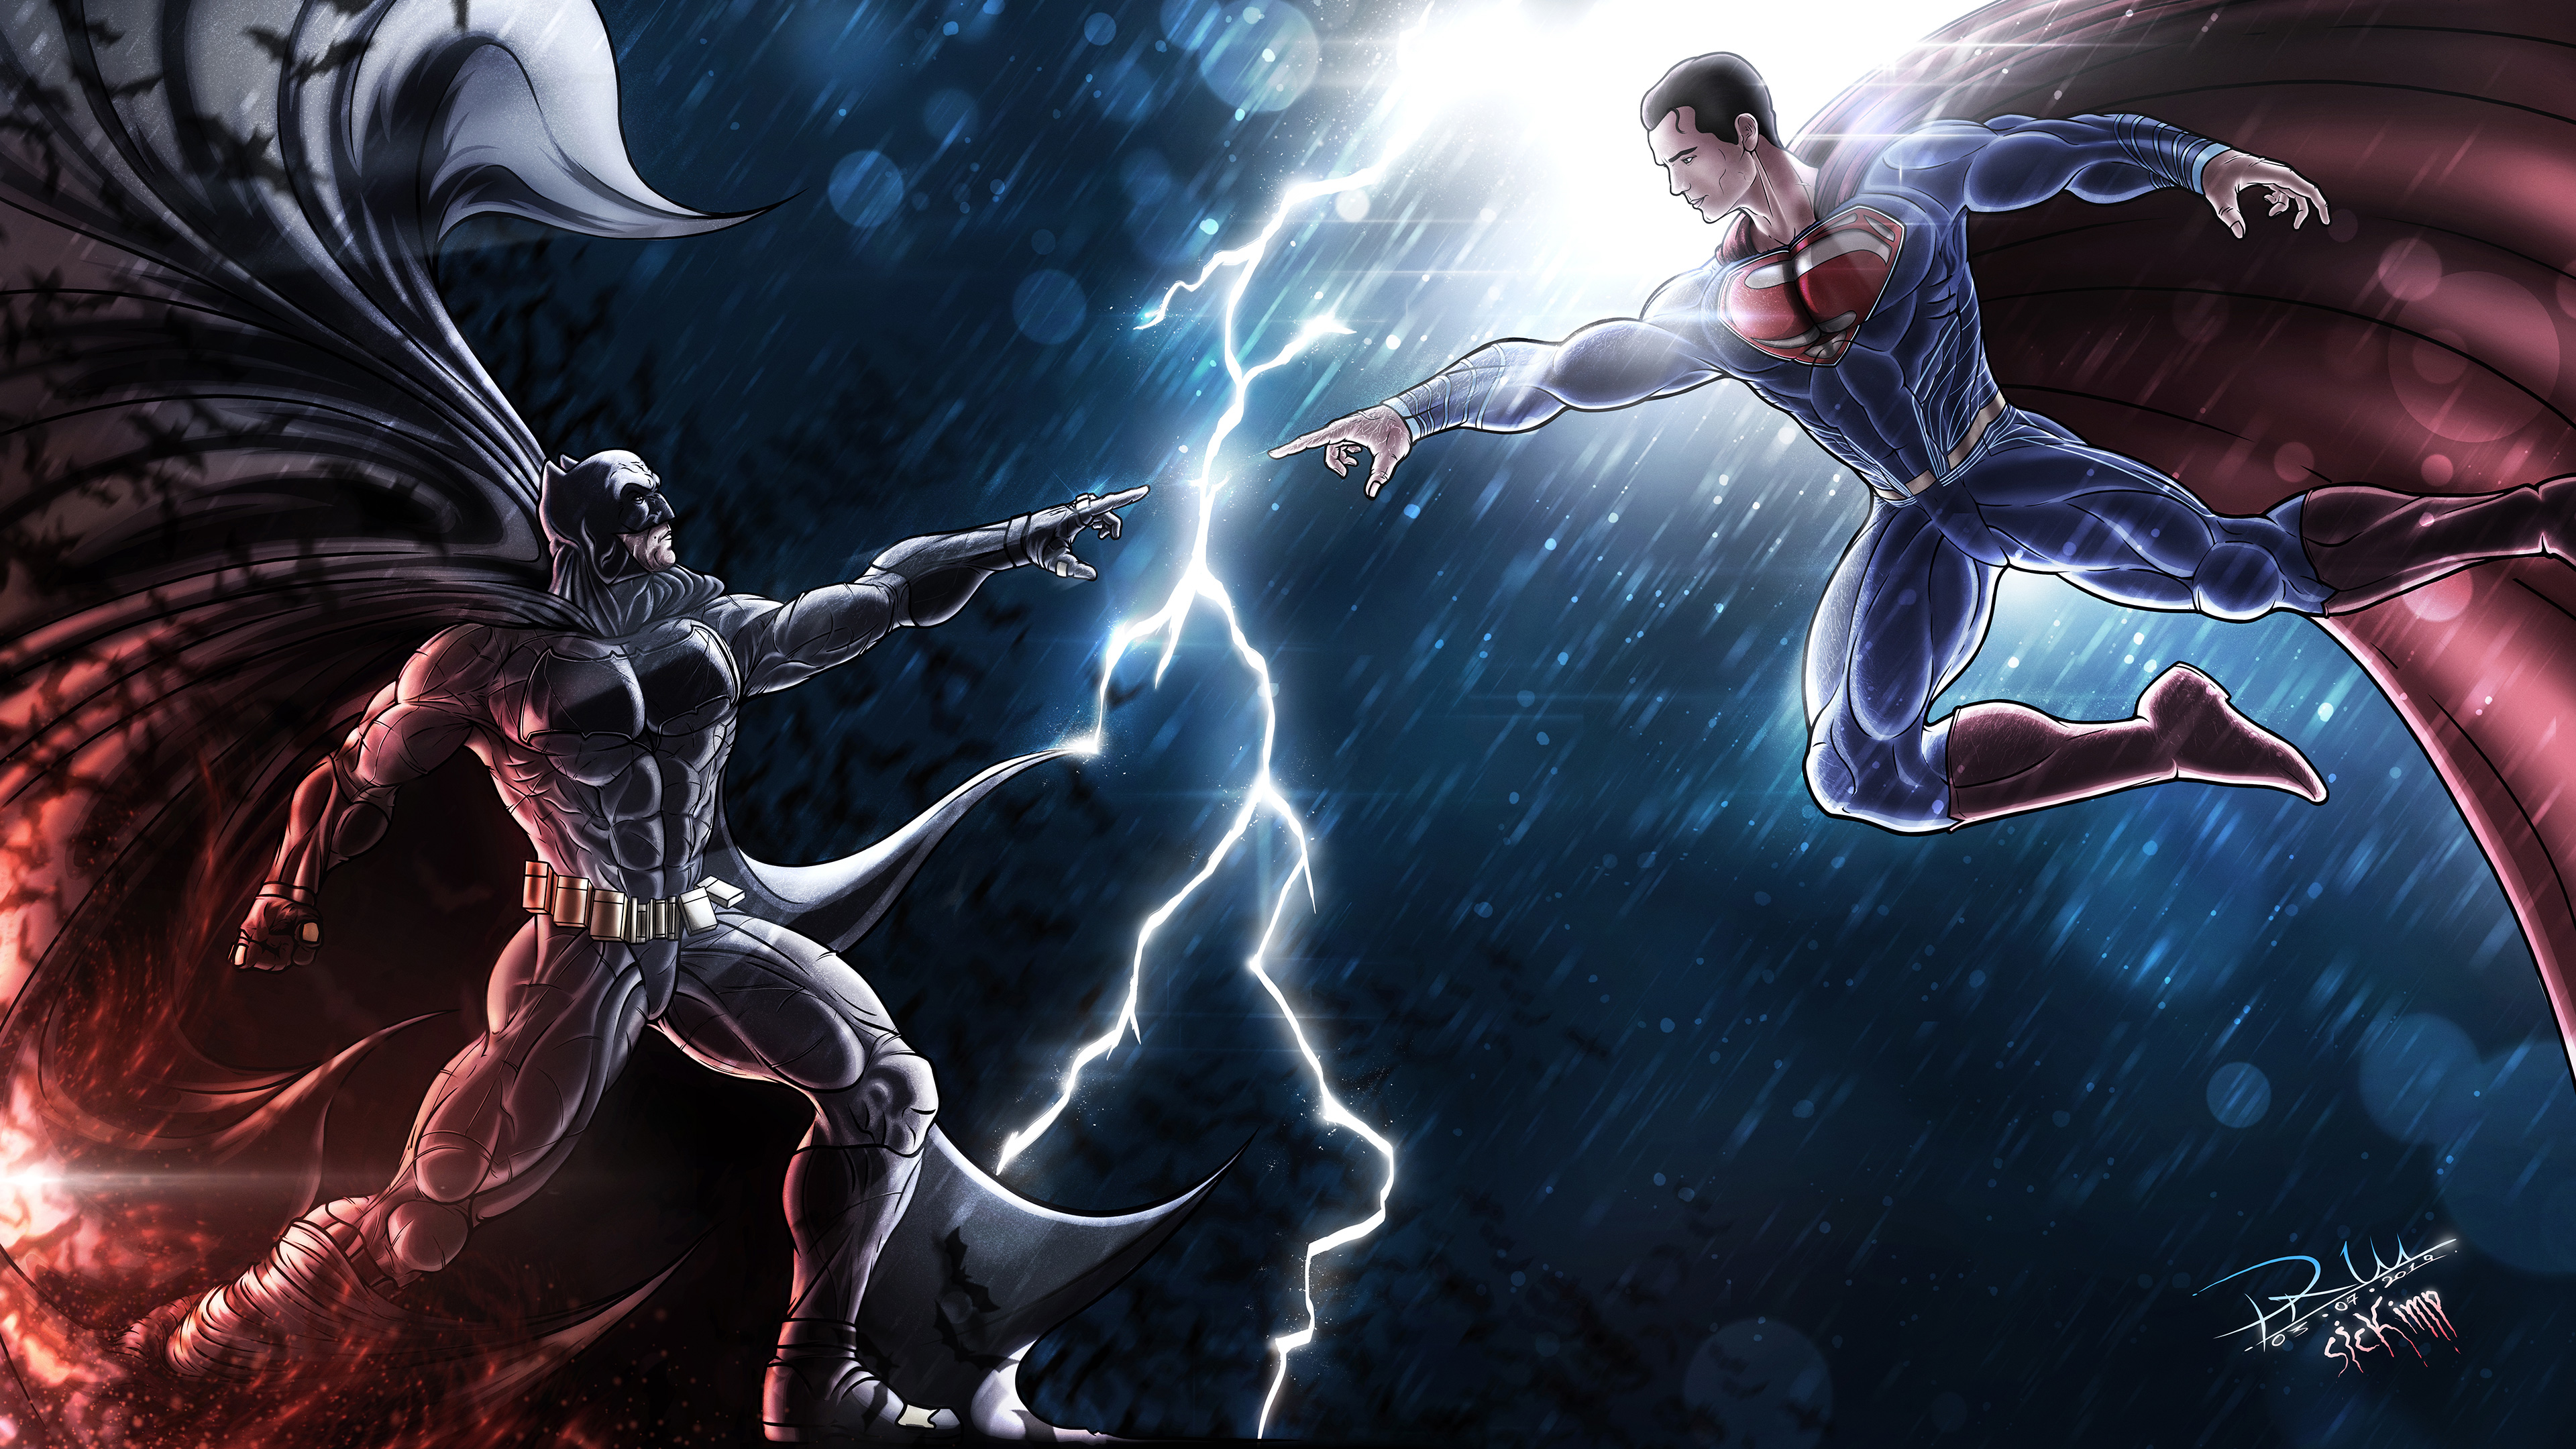 DC Batman vs Superman Wallpaper, HD Superheroes 4K Wallpapers, Images,  Photos and Background - Wallpapers Den